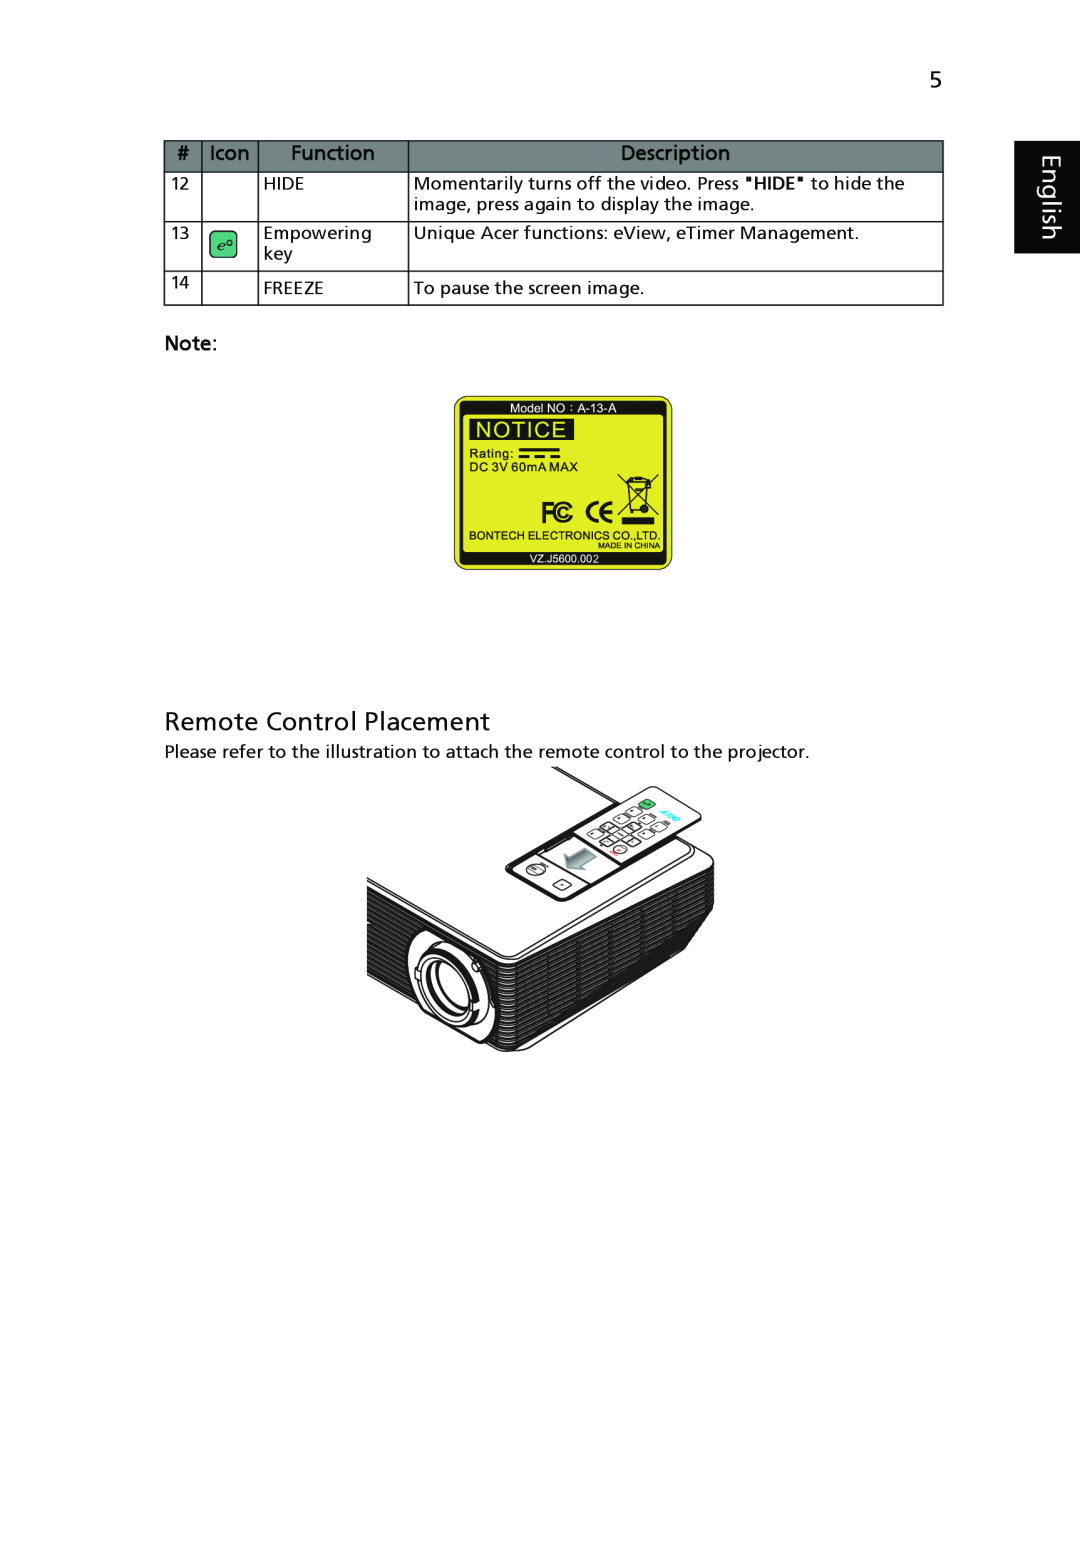 Acer H5350 manual Remote Control Placement, English, Icon, Function, Description 